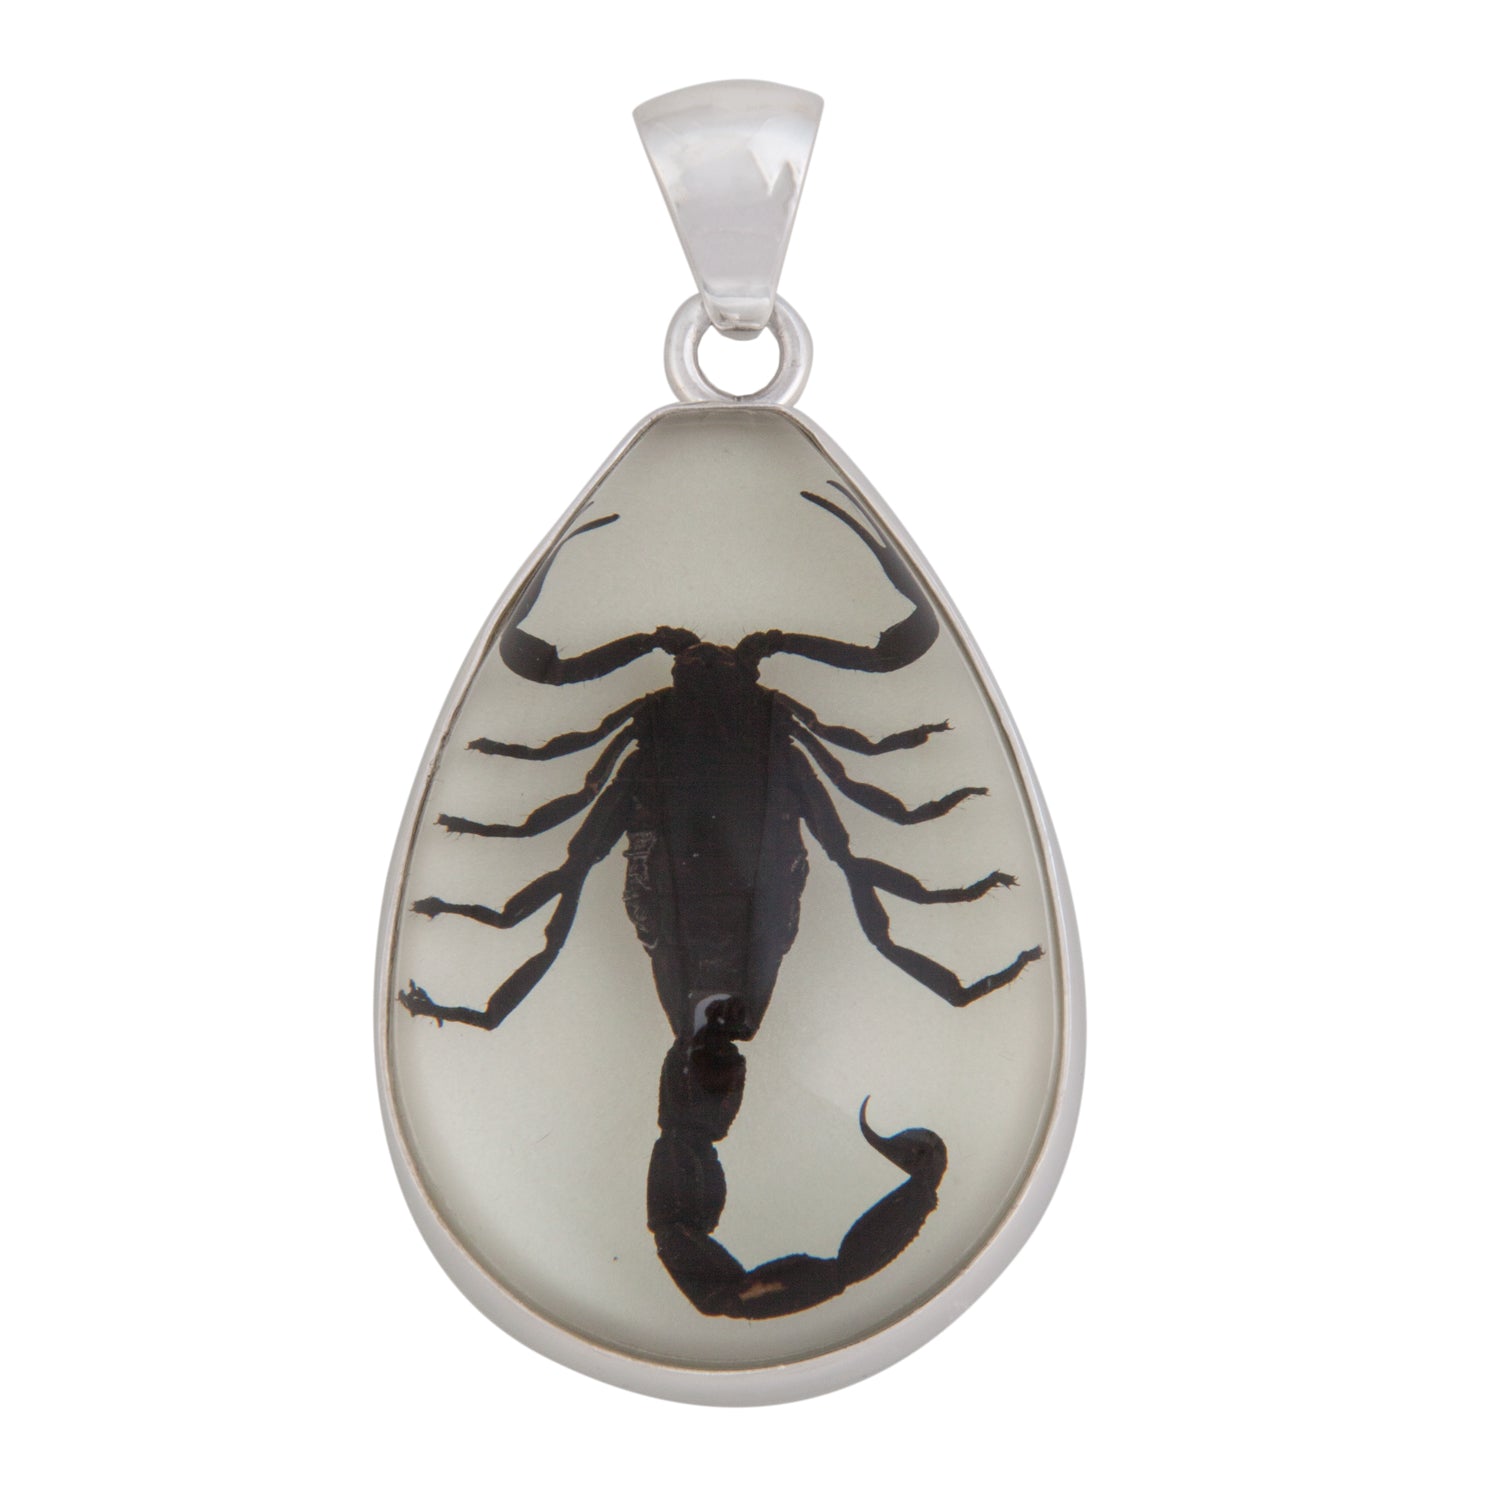 Sterling Silver Glow in the Dark Scorpion Pendant | Charles Albert Jewelry